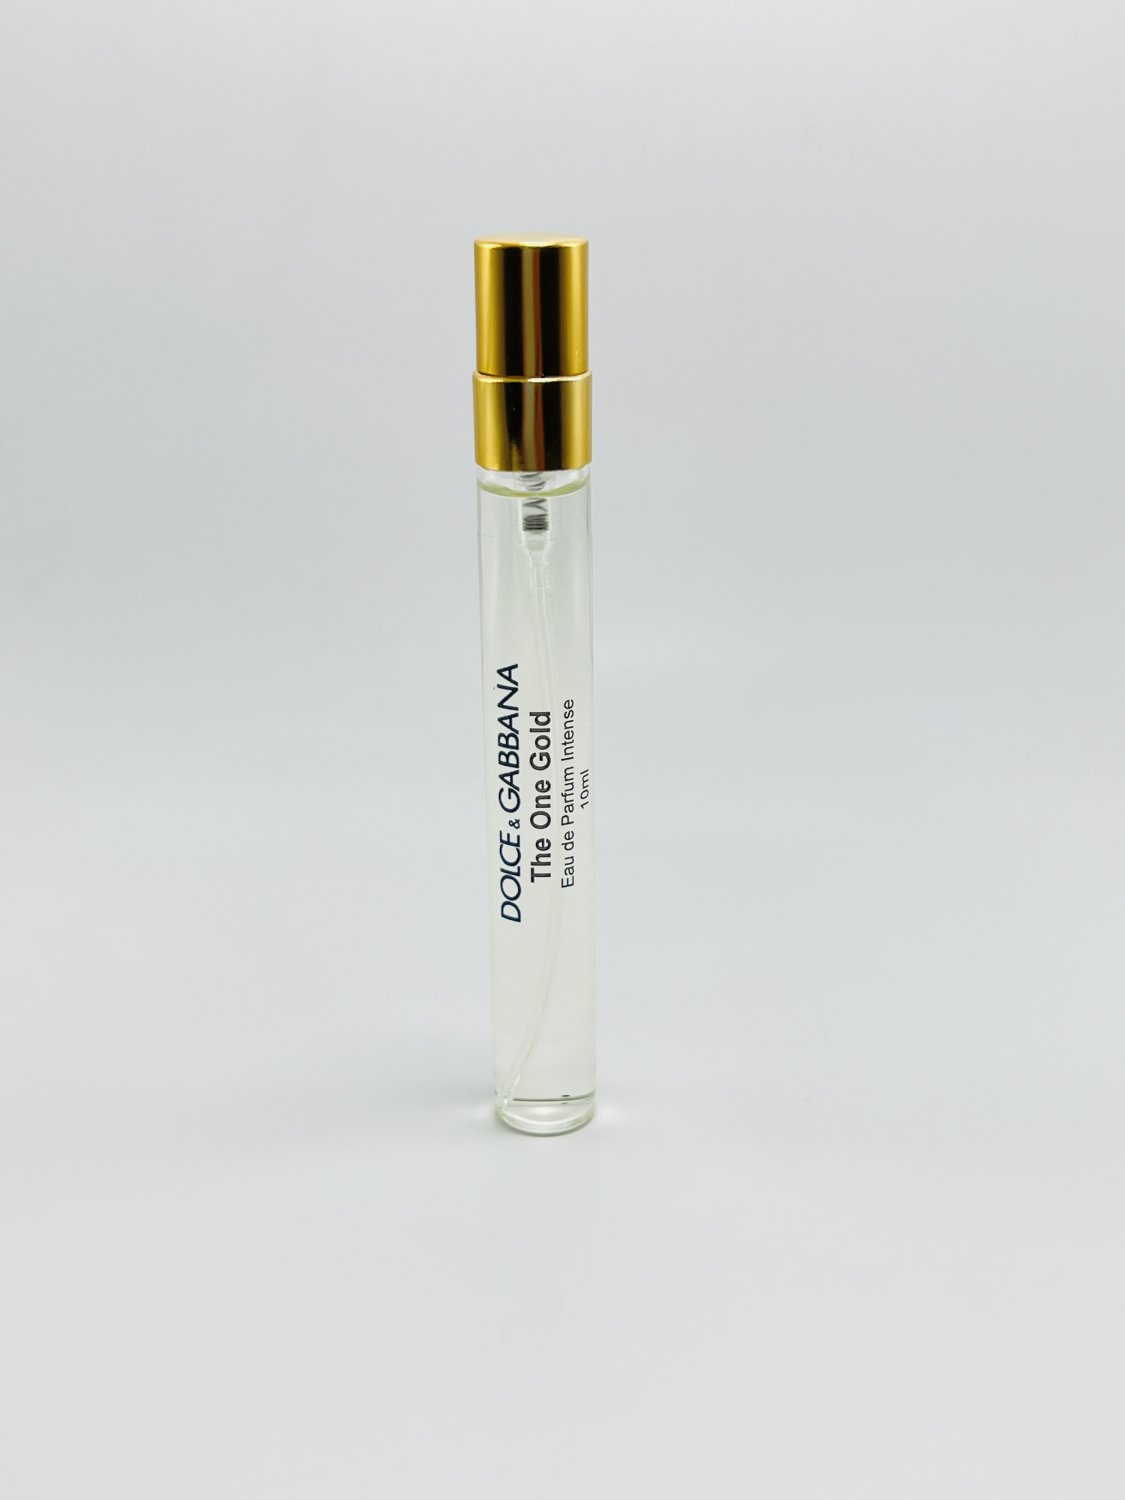 DOLCE&GABBANA Men's The One Gold Eau de Parfum Intense Spray 10ml Travel Spray